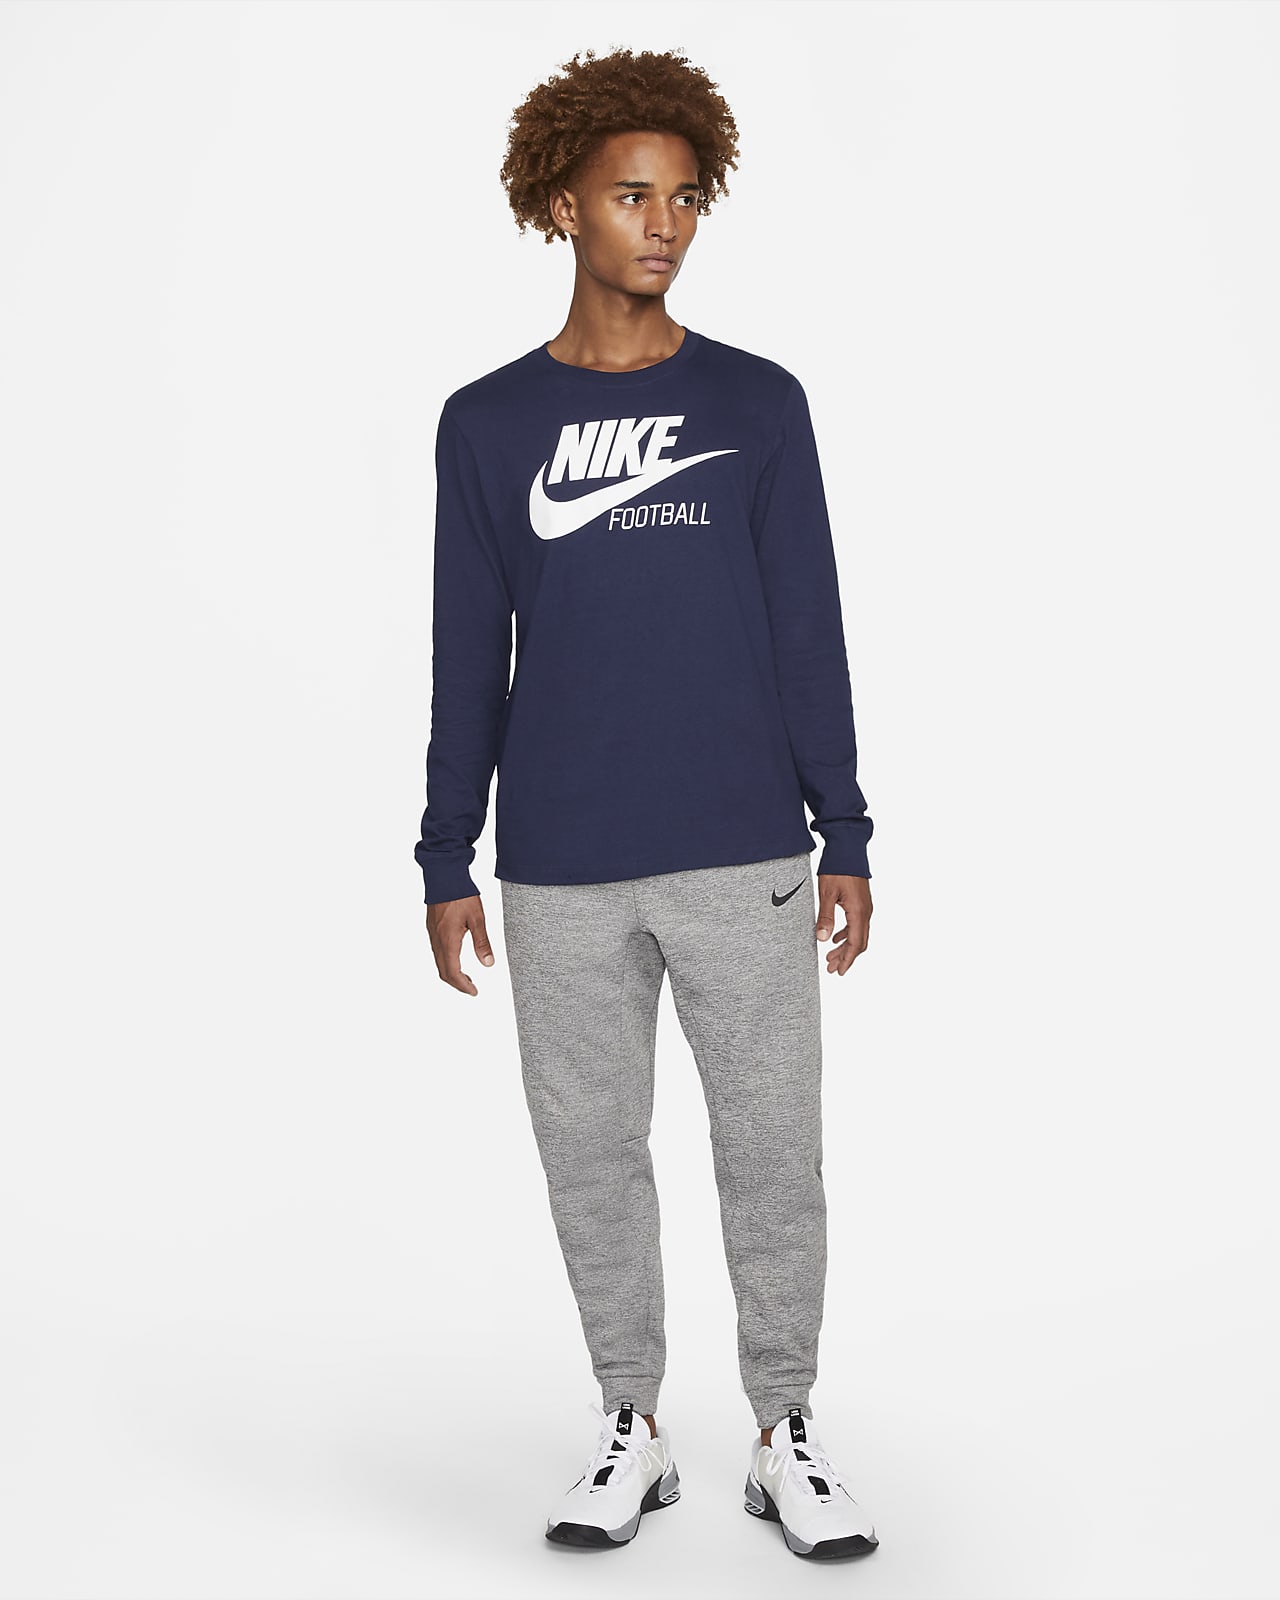 Envision Cereal Strait thong Nike Swoosh Men's Long-Sleeve T-Shirt. Nike.com